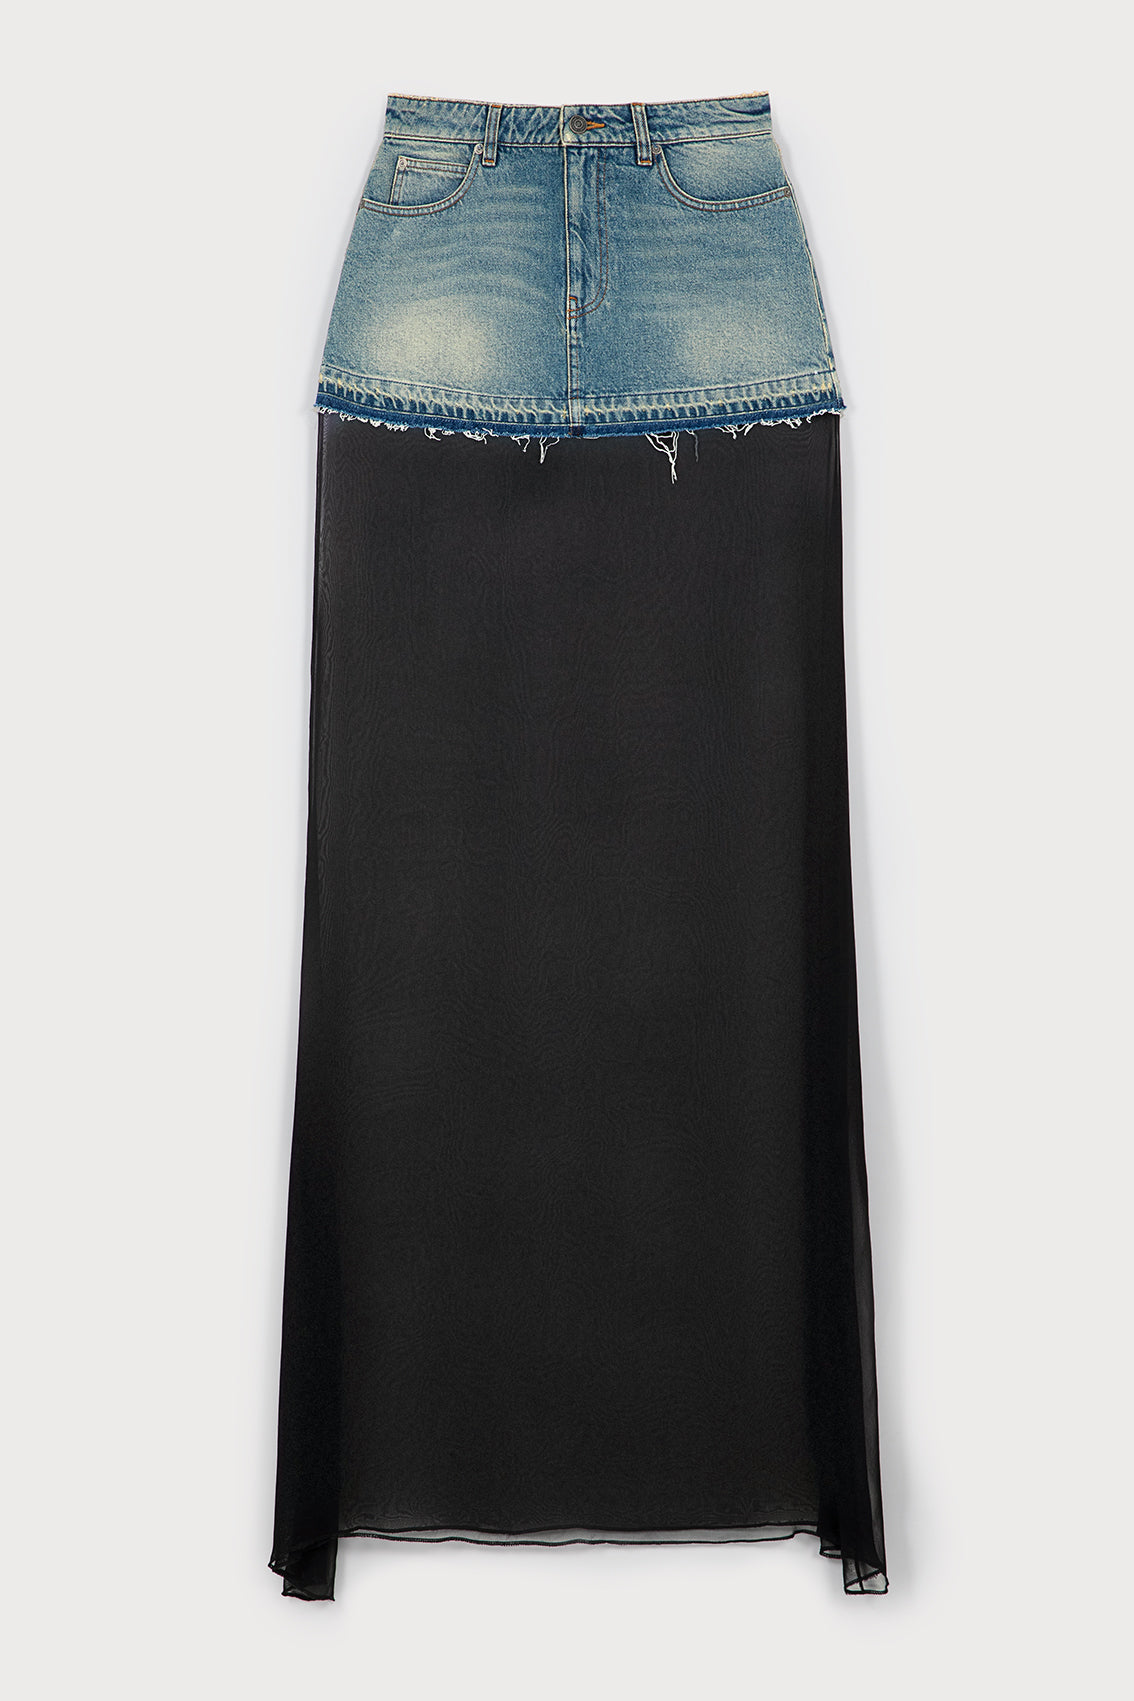 Sheer-Panel Washed-Denim Skirt